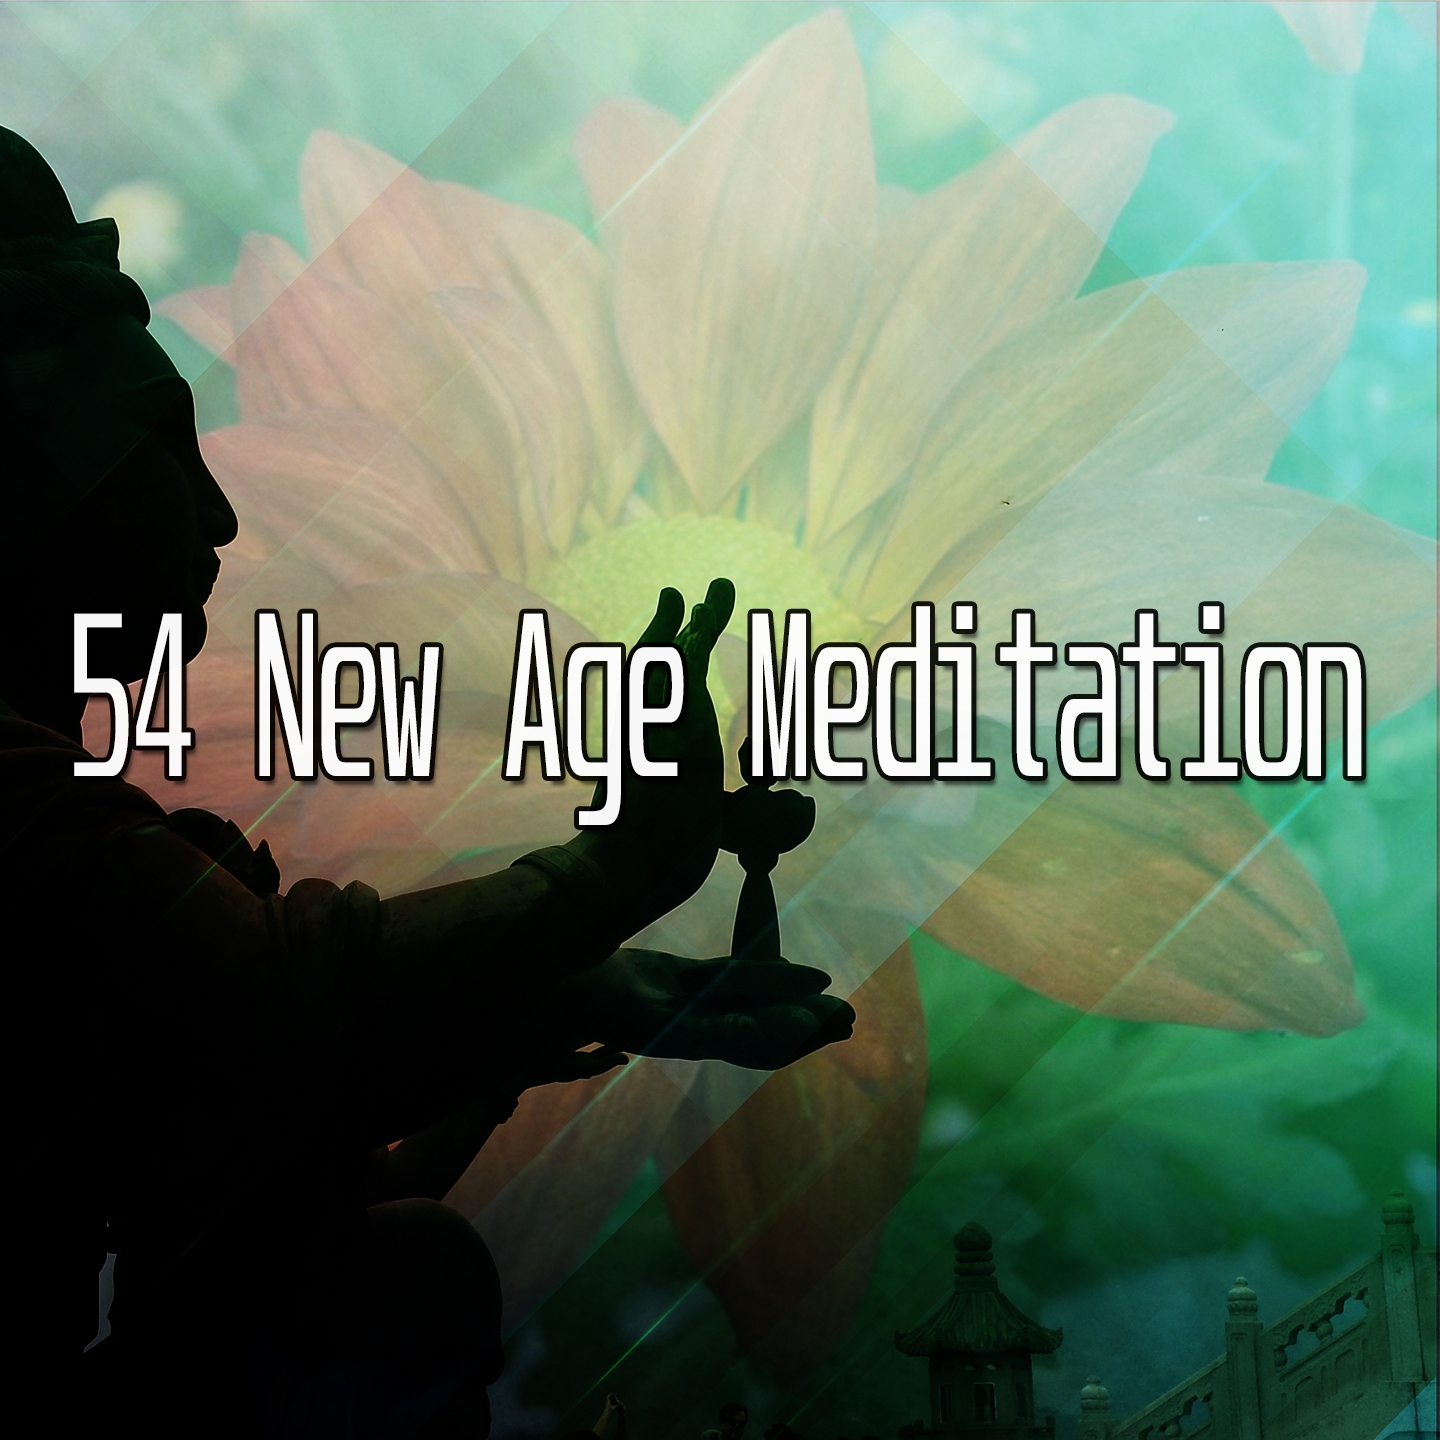 54 New Age Meditation